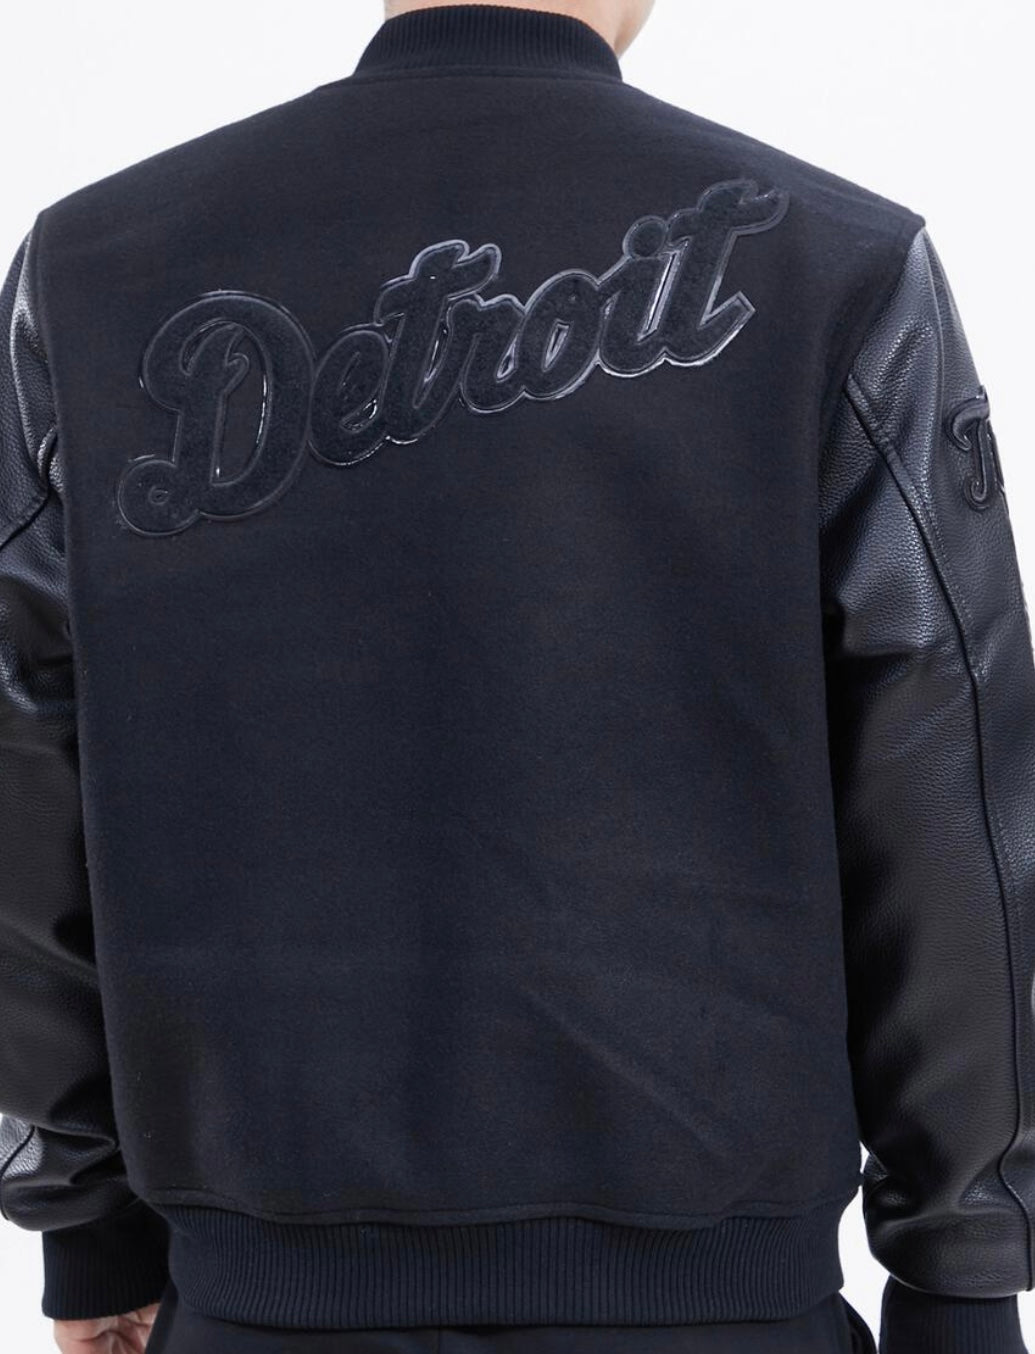 Wilson Sweatshirts & Jackets  Central Varsity Jacket Faded Black